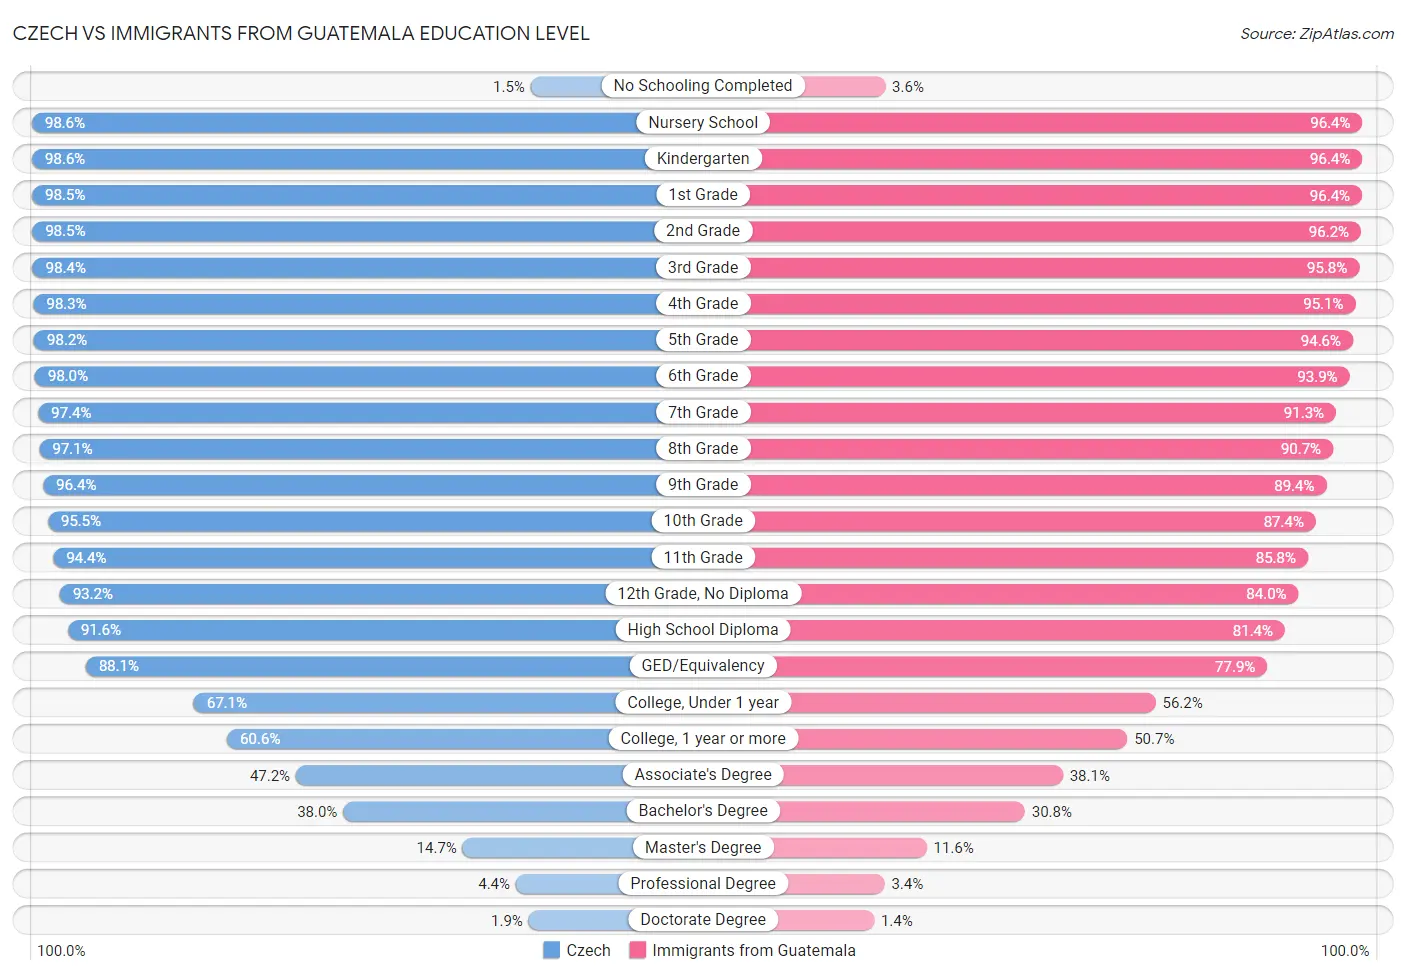 Czech vs Immigrants from Guatemala Education Level